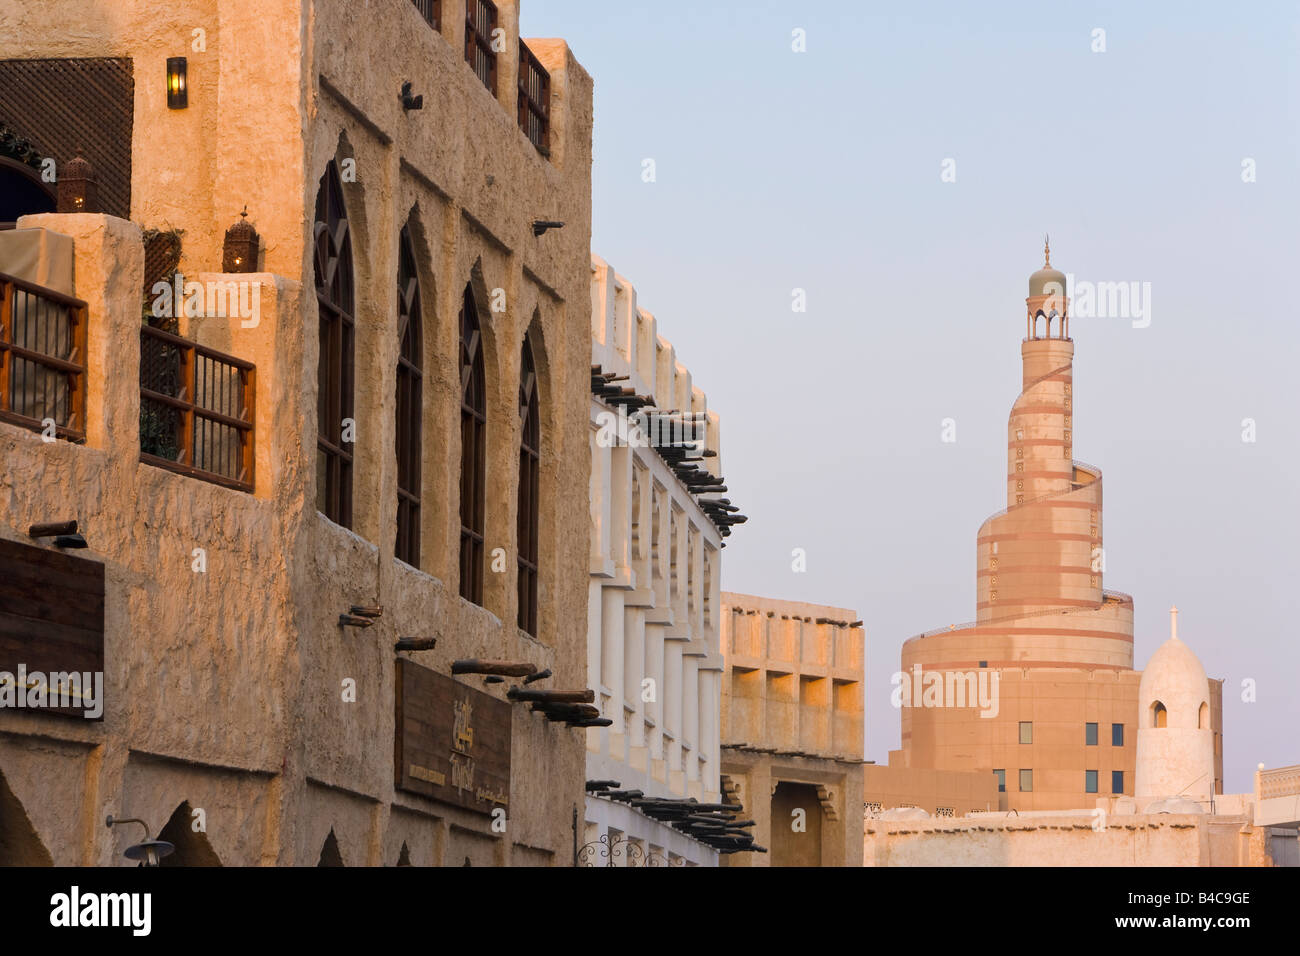 Qatar, Middle East, Arabian Peninsula, Doha, the spiral mosque of the Kassem Darwish Fakhroo Islamic Centre in Doha Stock Photo